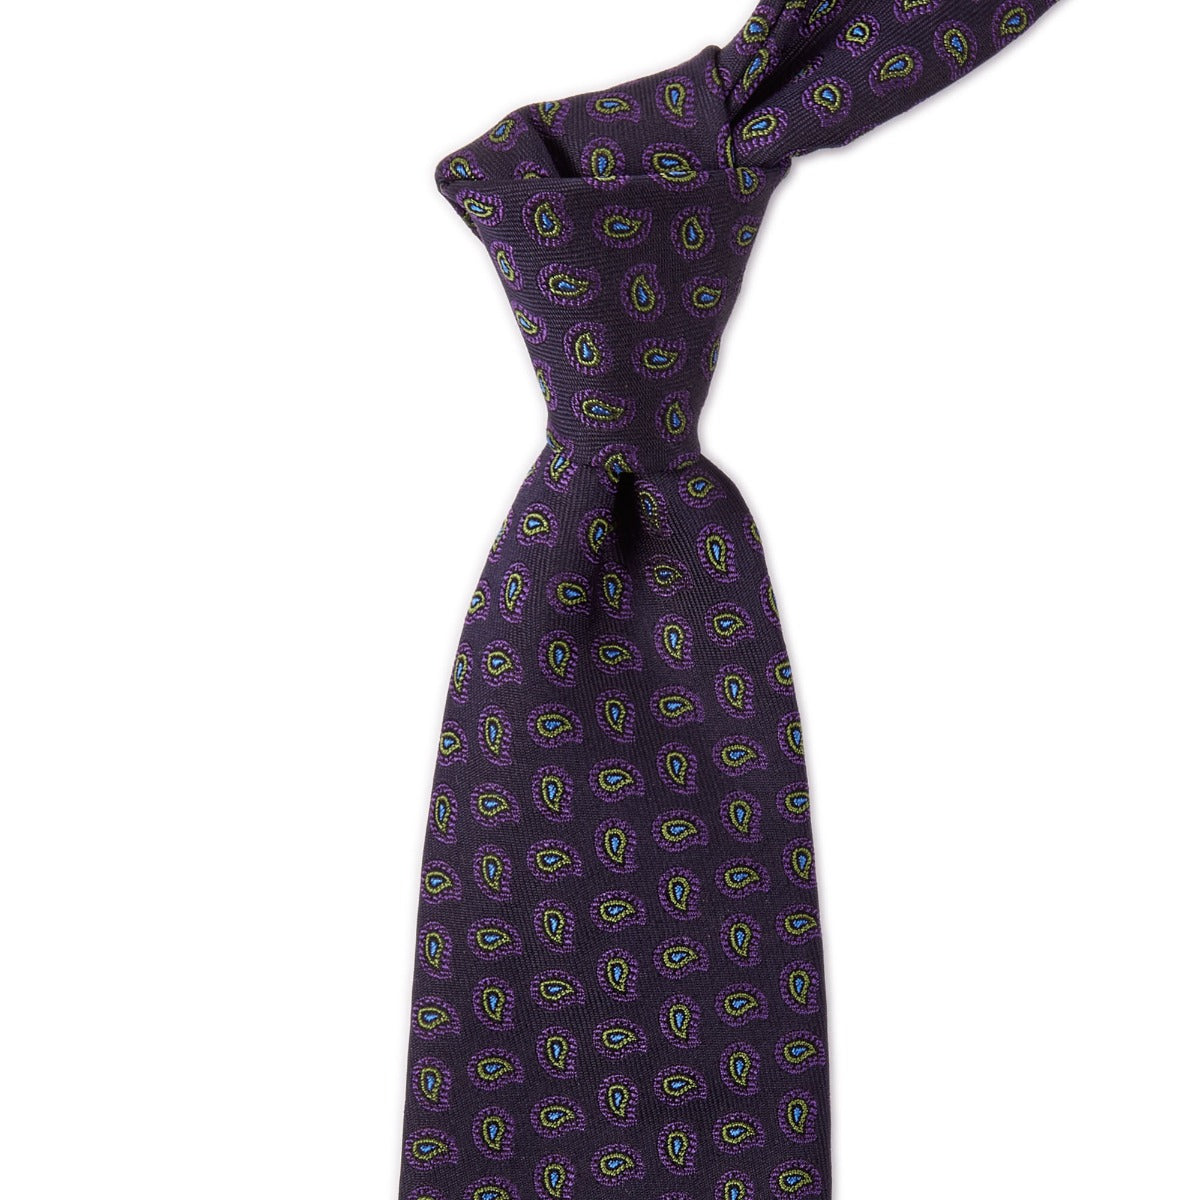 A Kirby Allison Sovereign Grade Navy Paisley Jacquard Silk Tie, 100% English silk available on KirbyAllison.com.